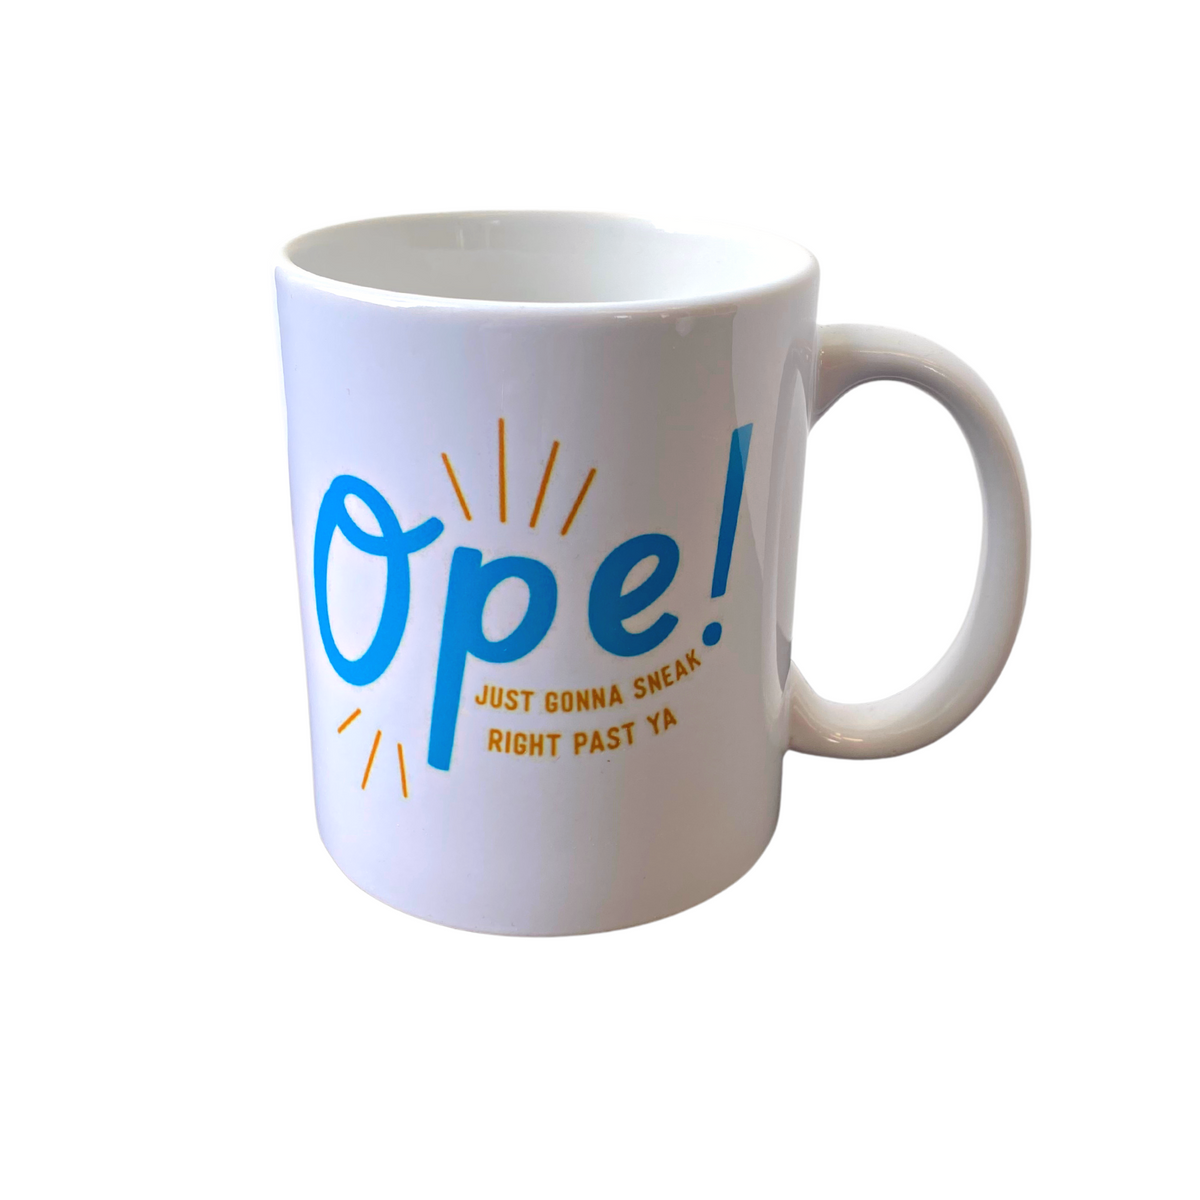 Ope! Coffee Mug